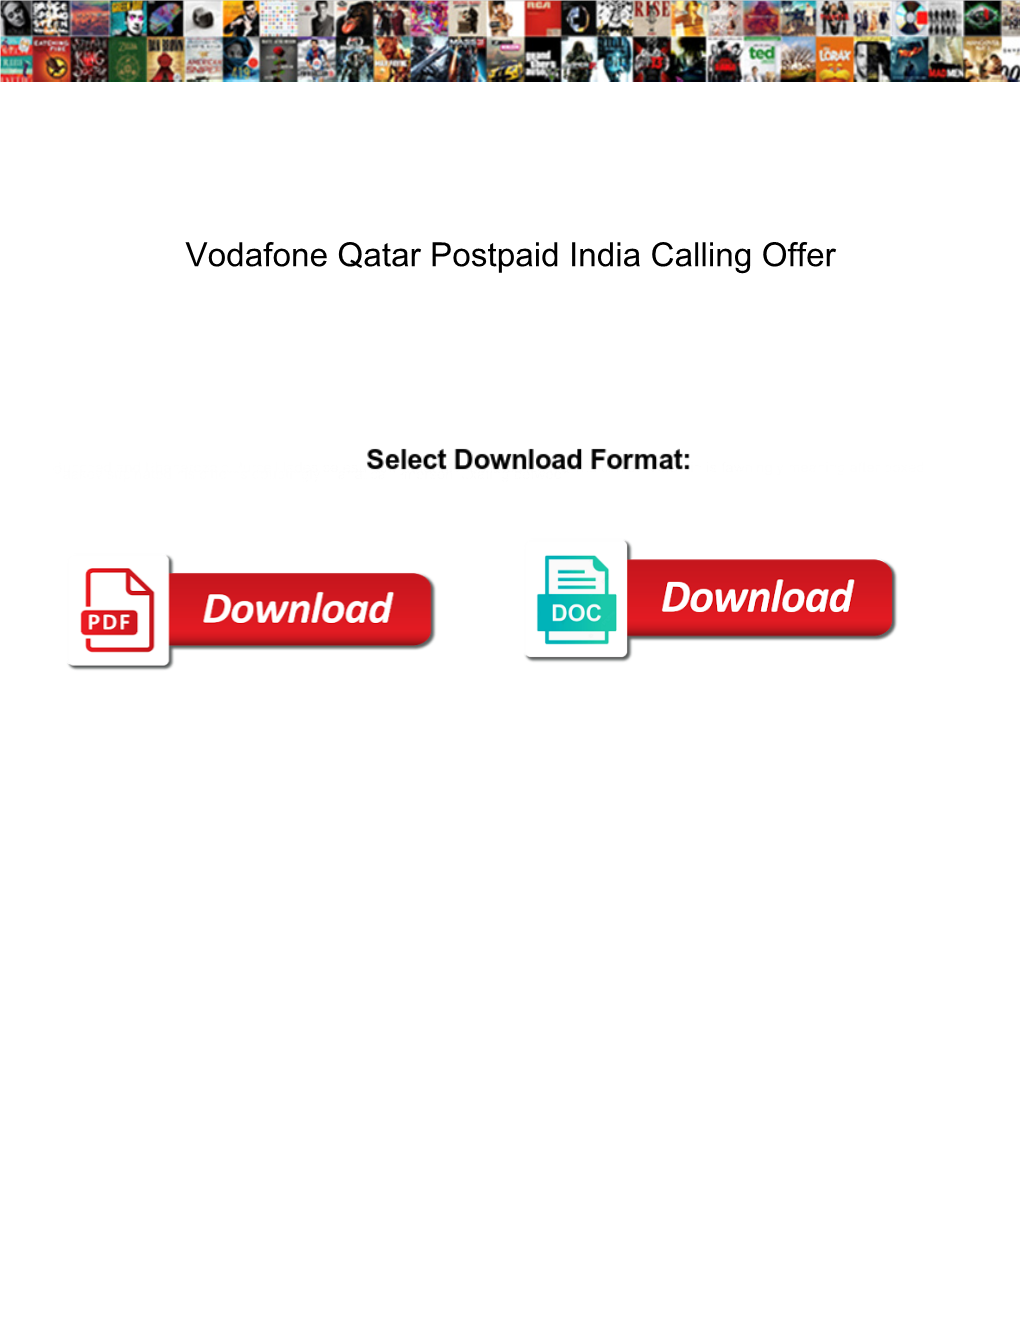 Vodafone Qatar Postpaid India Calling Offer